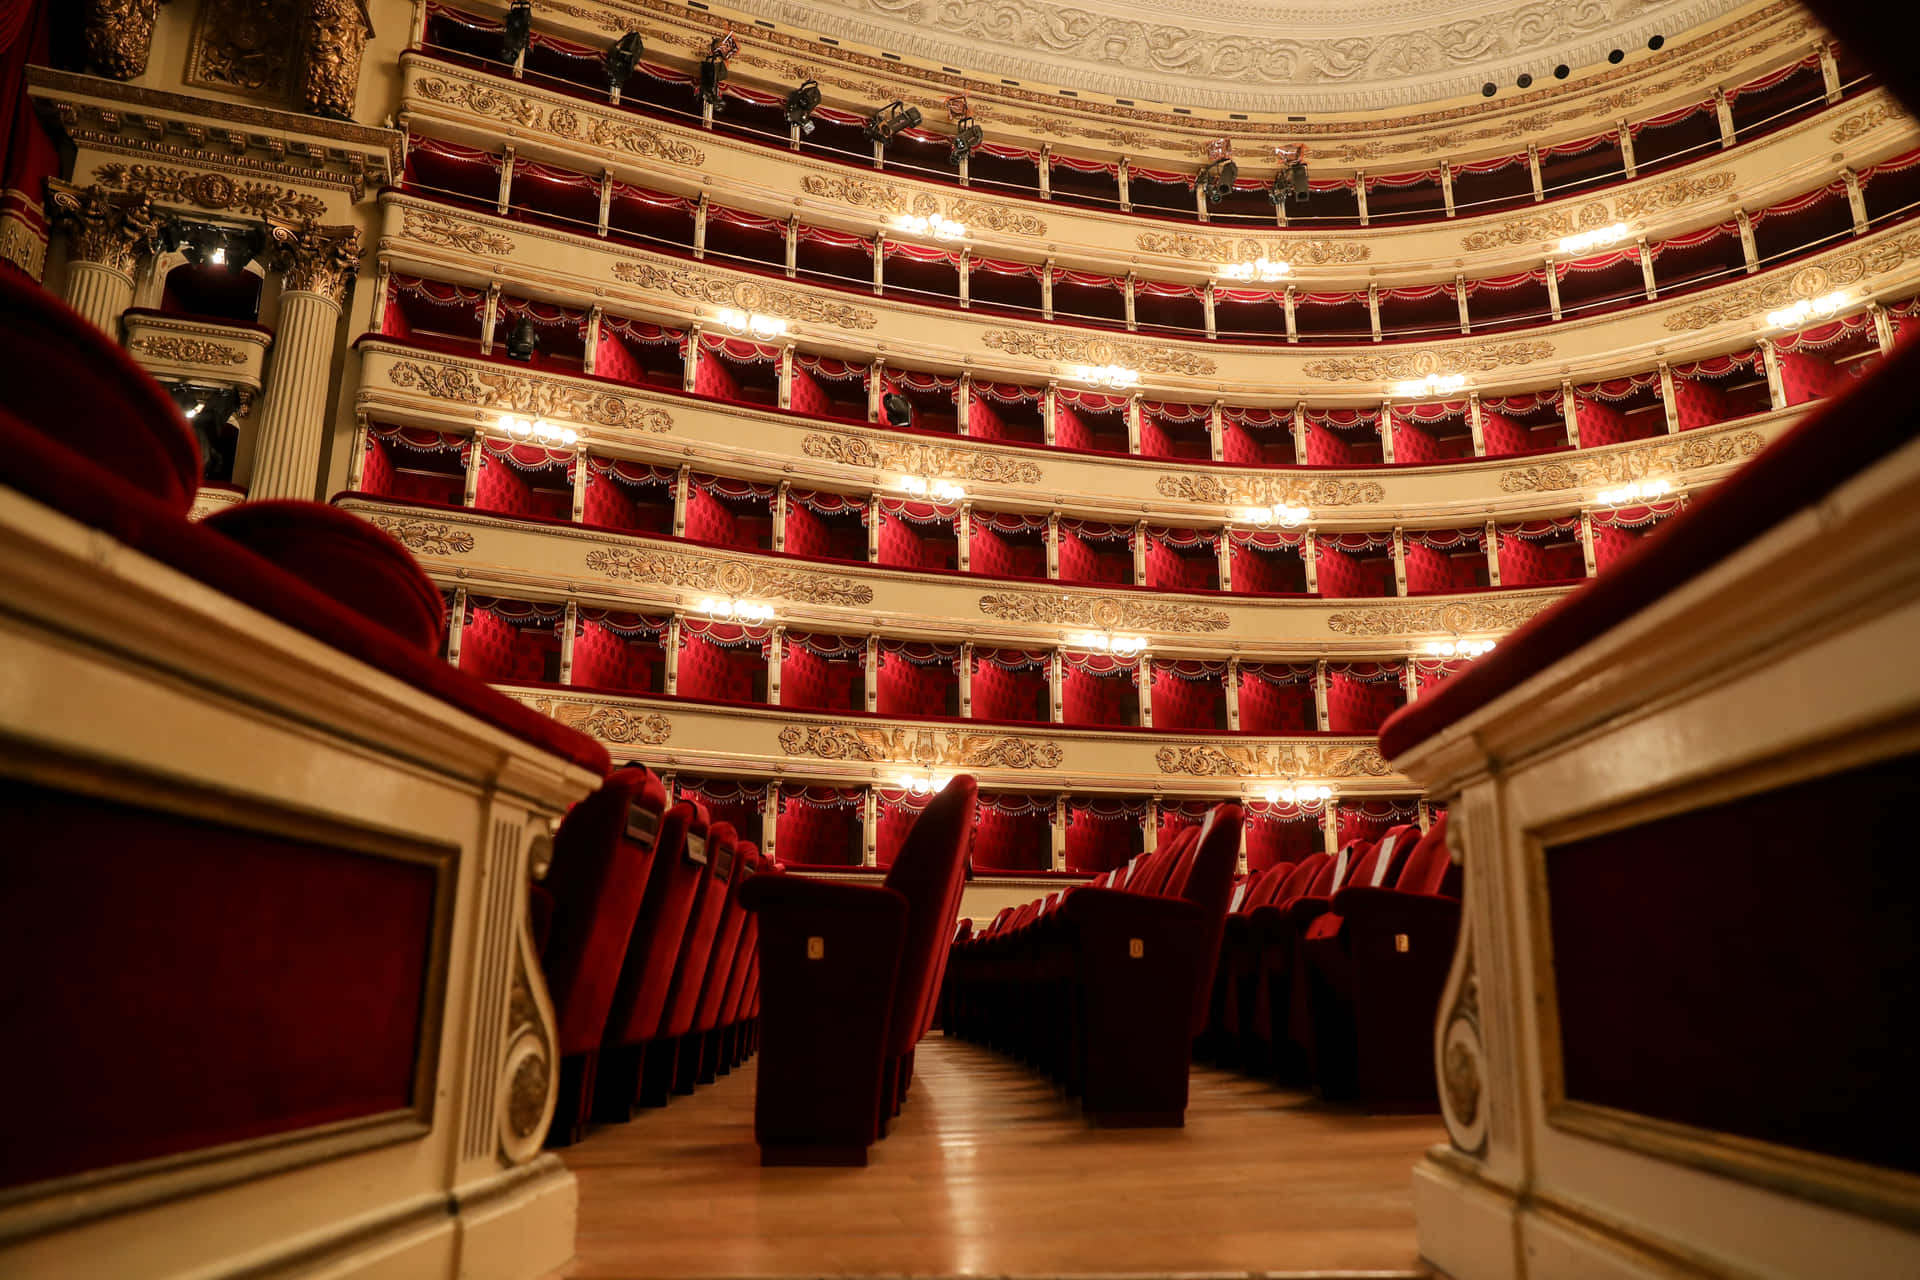 Assentosdentro Da Casa De Ópera La Scala Papel de Parede